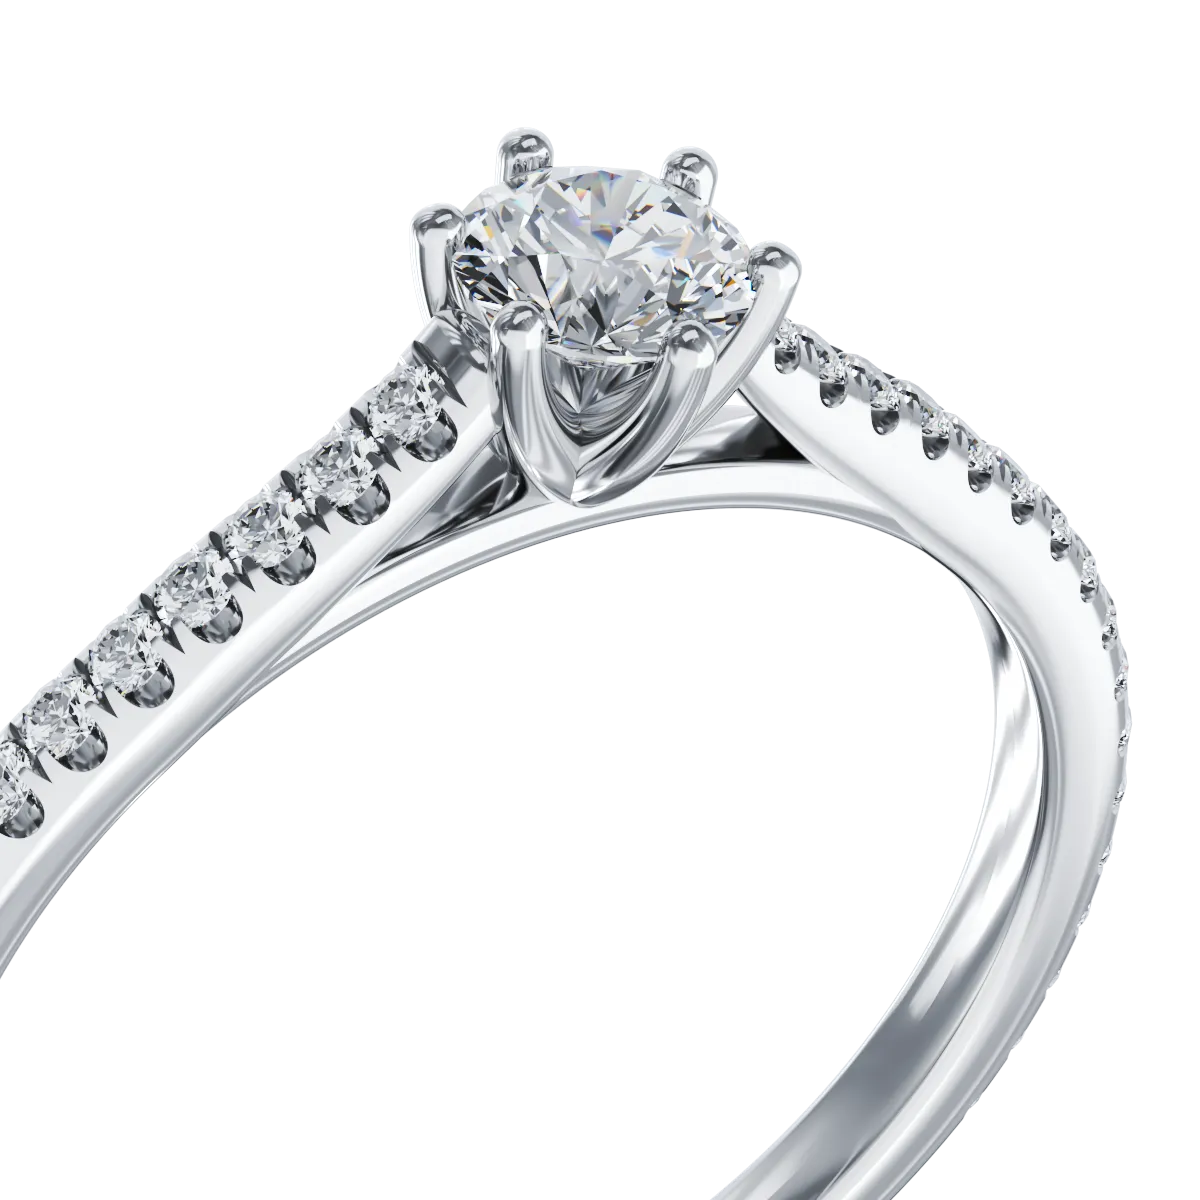 Platinum engagement ring with 0.2ct diamond and 0.167ct diamonds